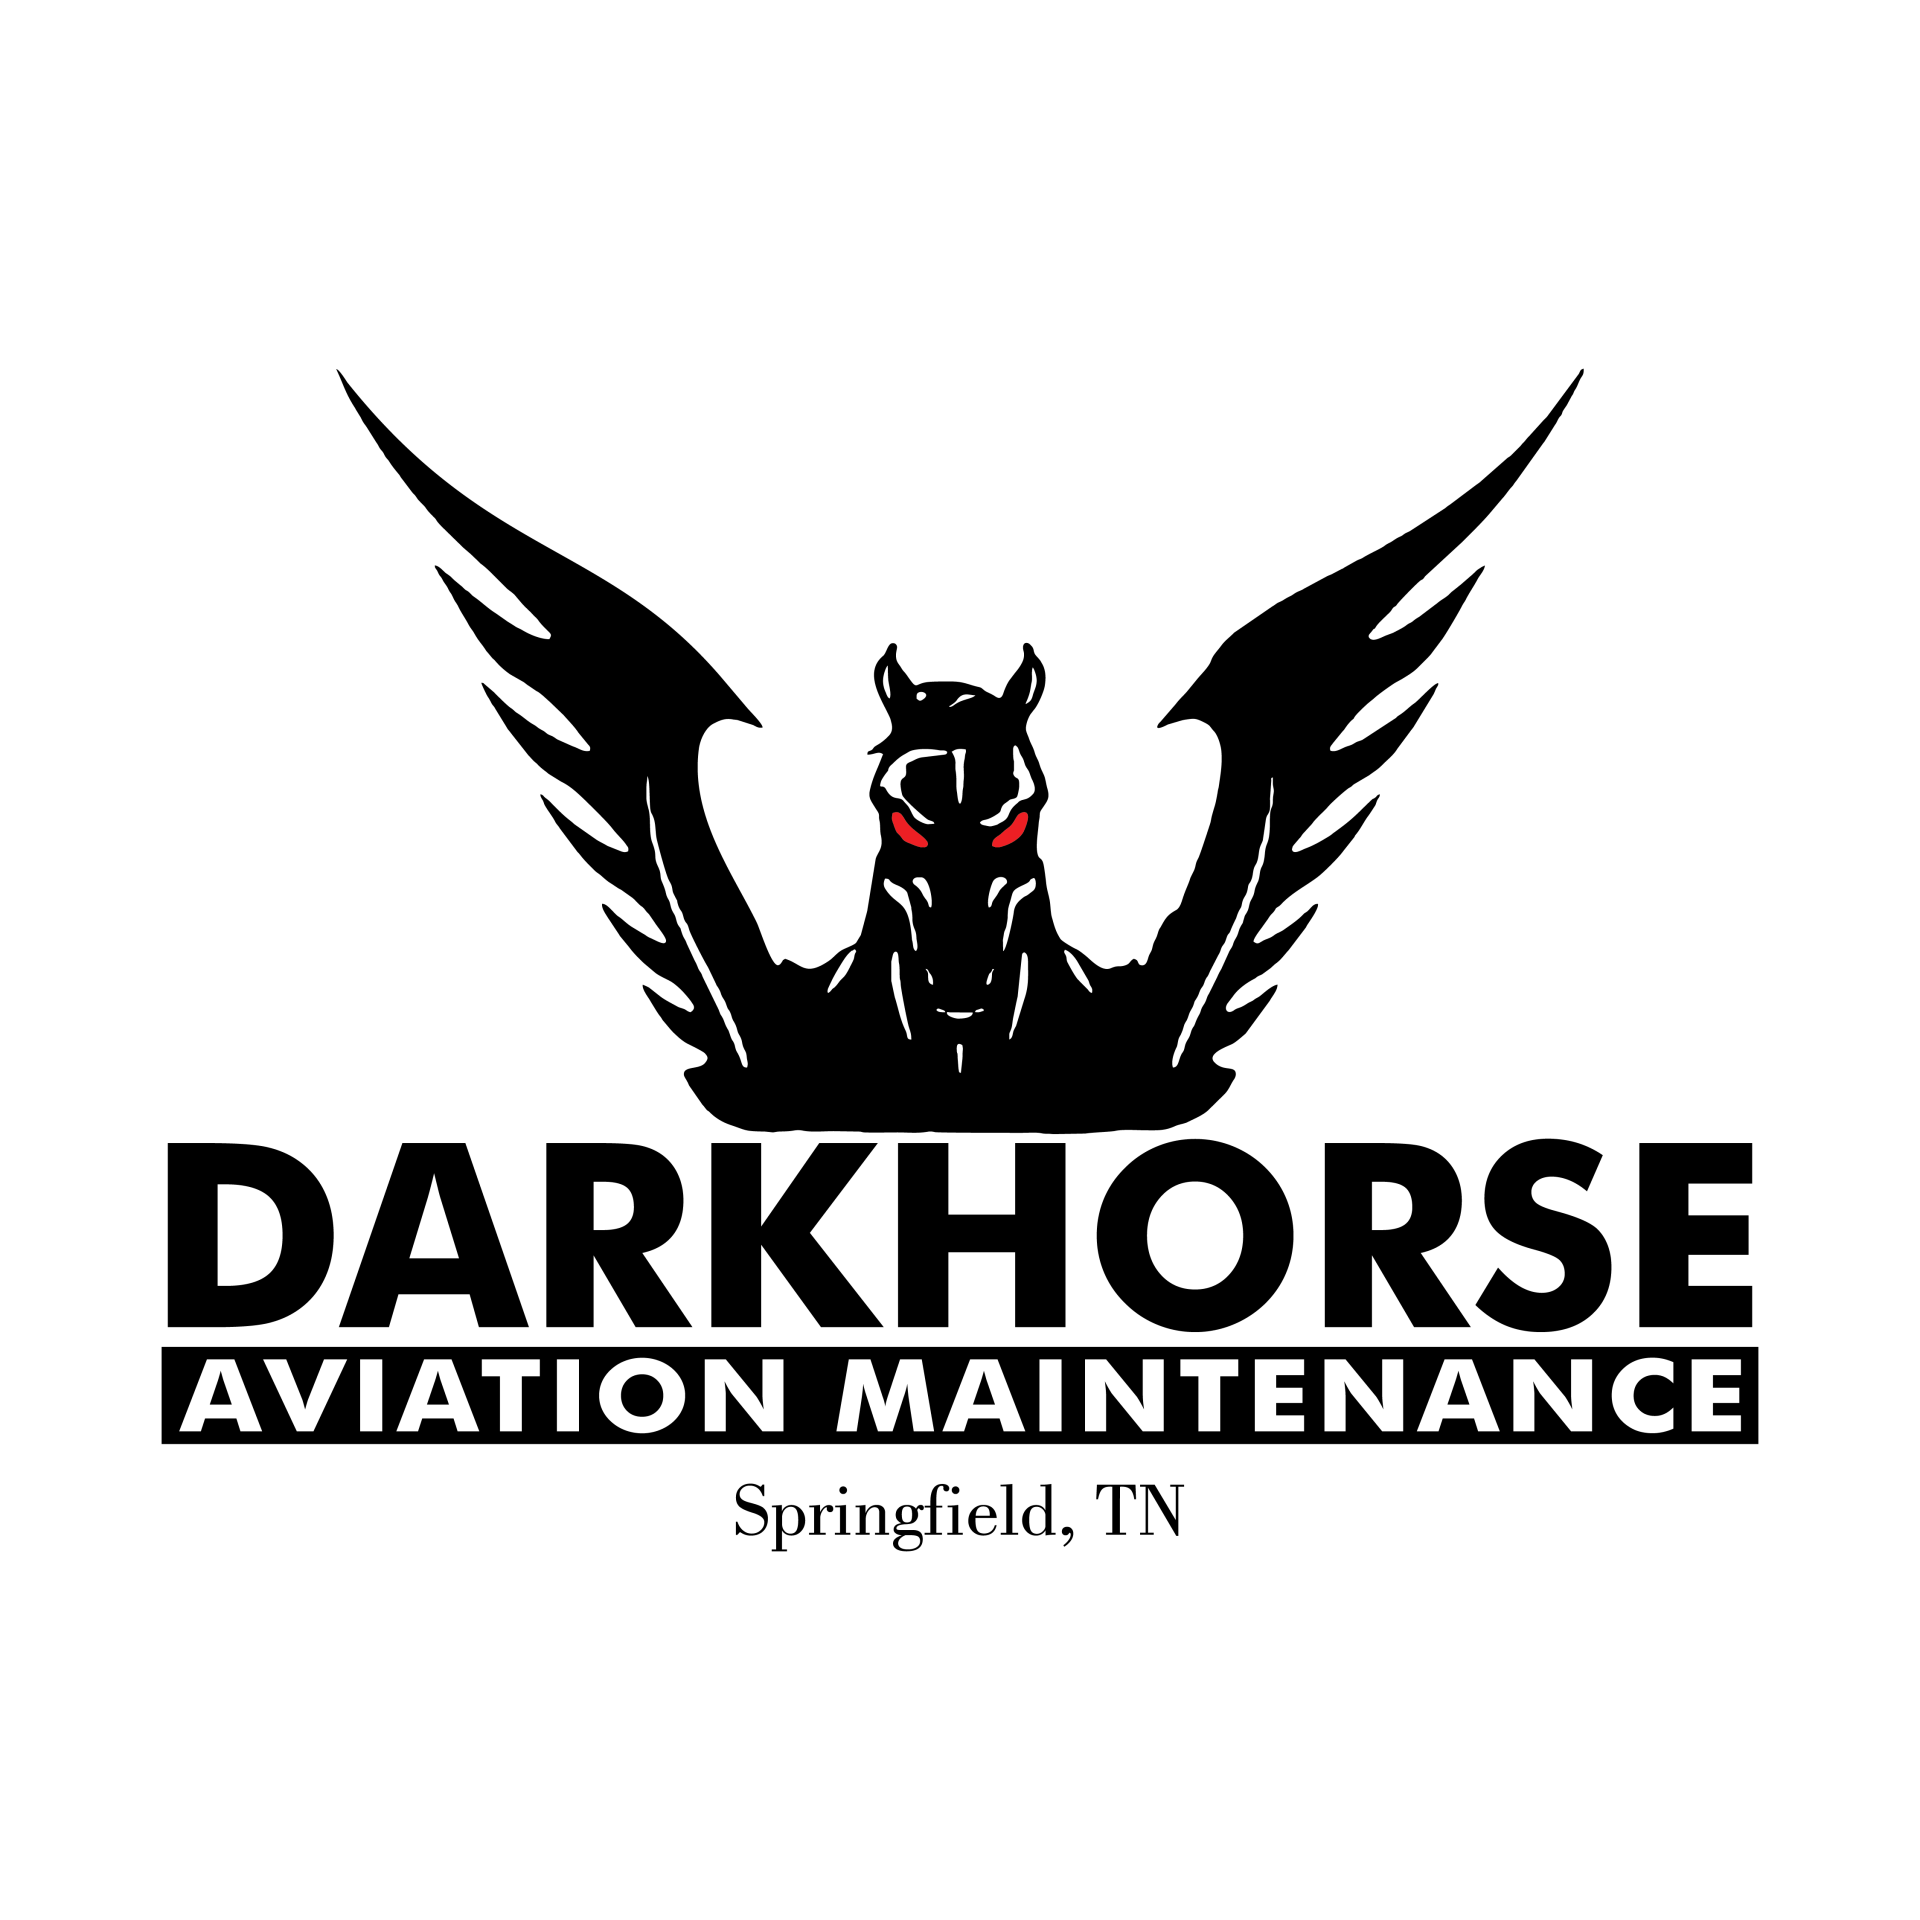 Darkhorse Aviation Maintenance Springfield TN logo